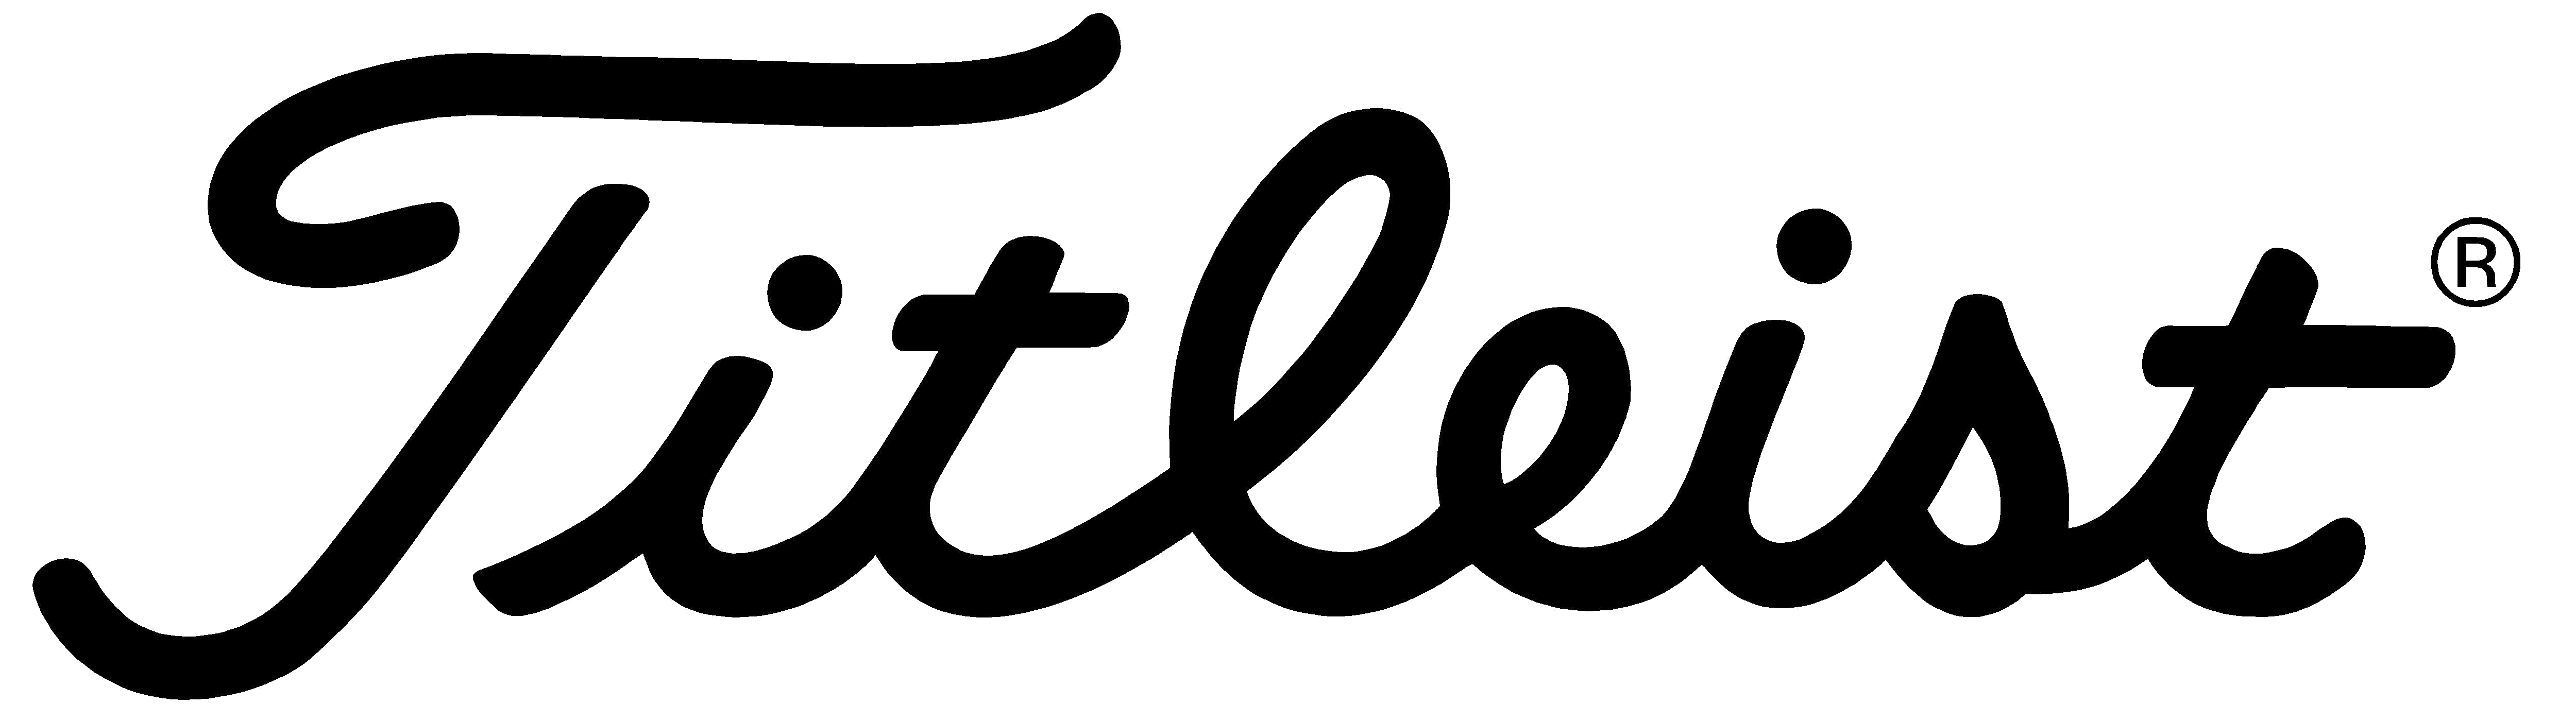 Taylormade logo 